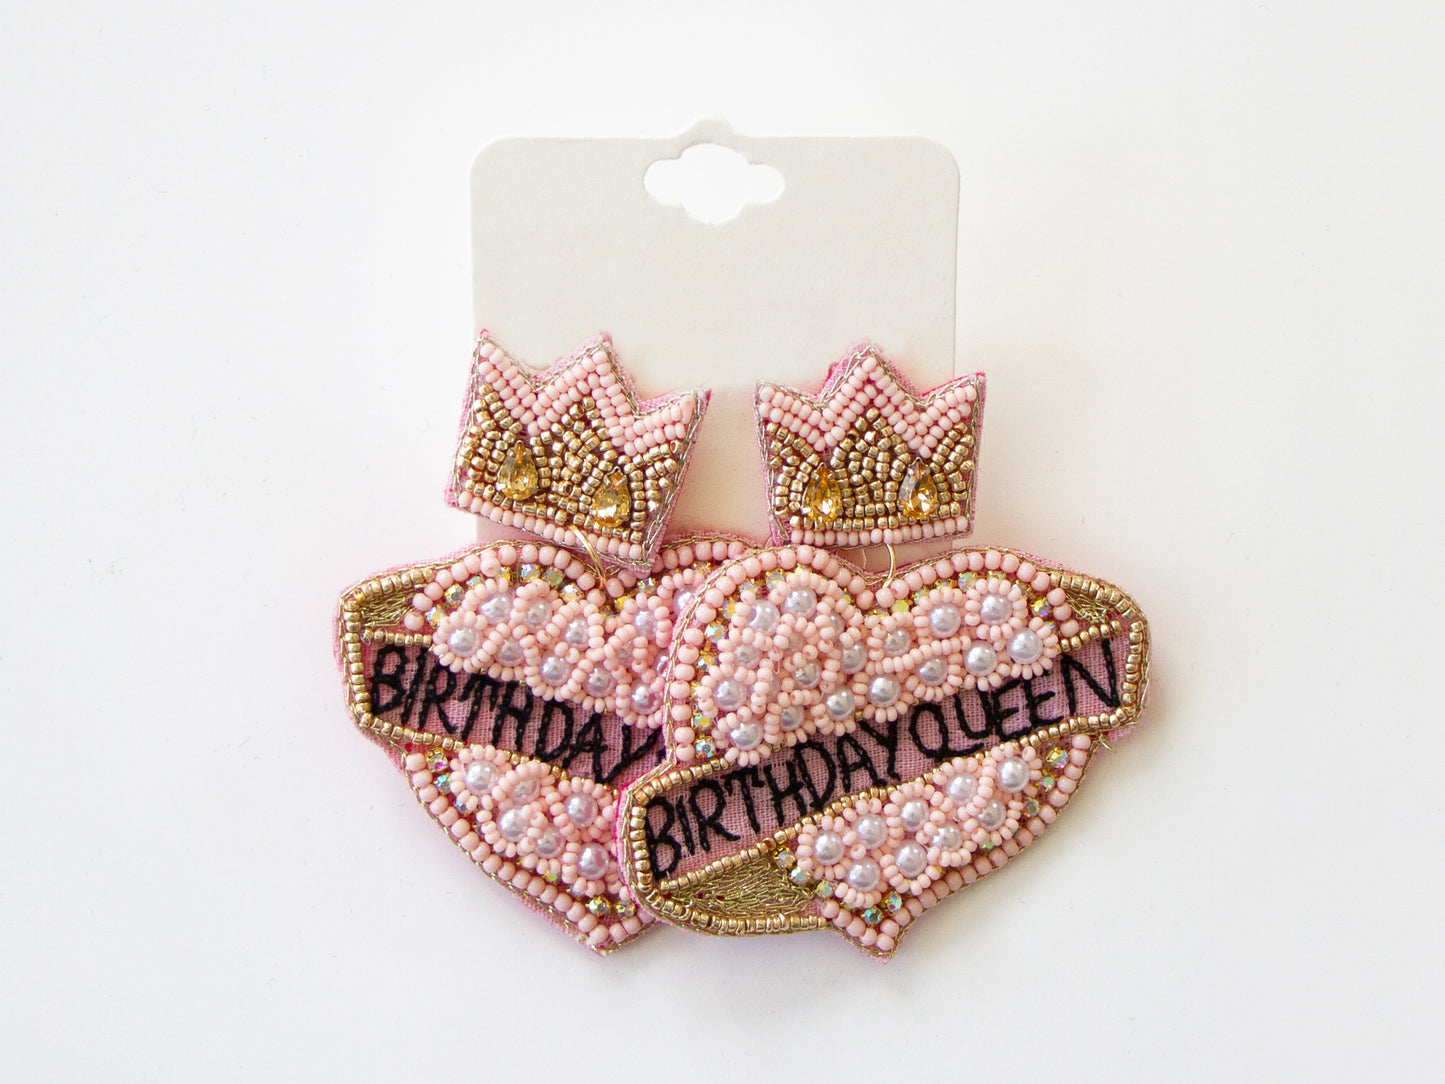 Pink Birthday Queen Earrings